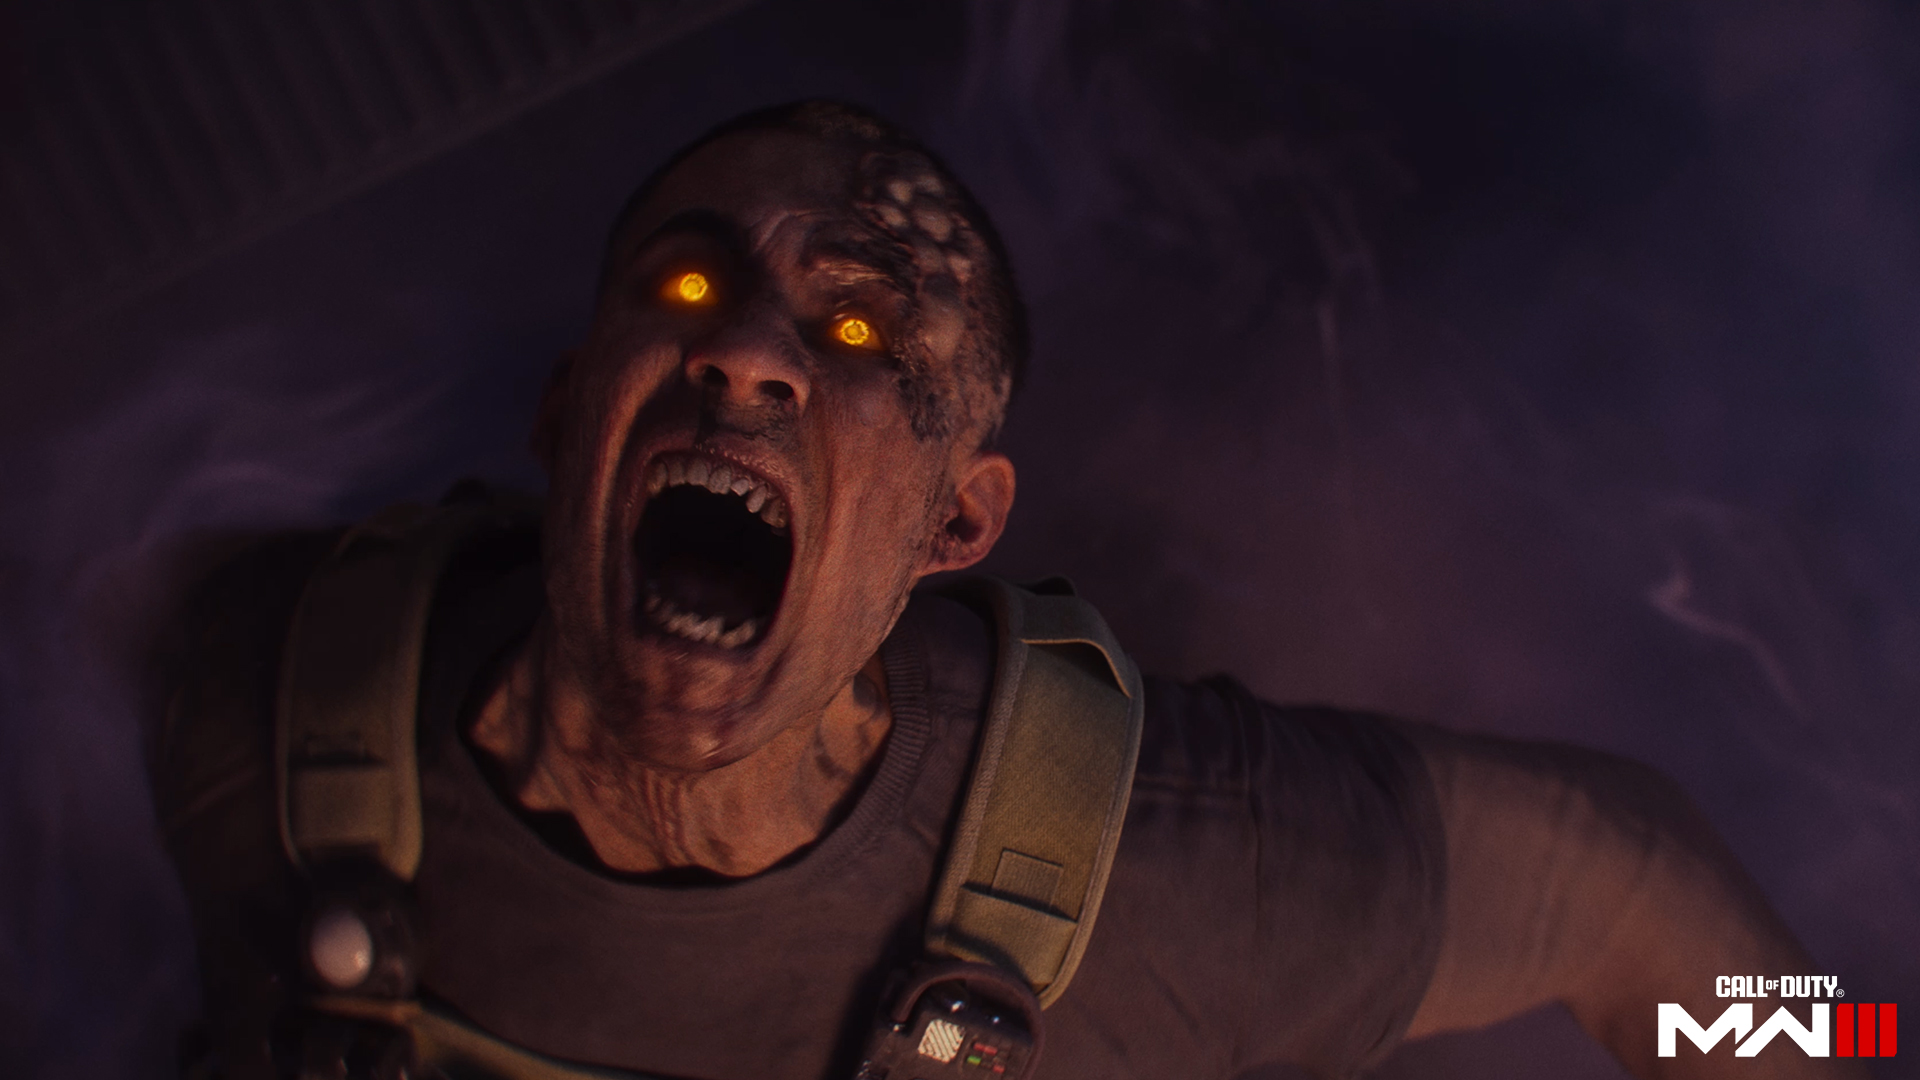 Modern Warfare III Trailer Has New Zombie Mode, Familiar Faces